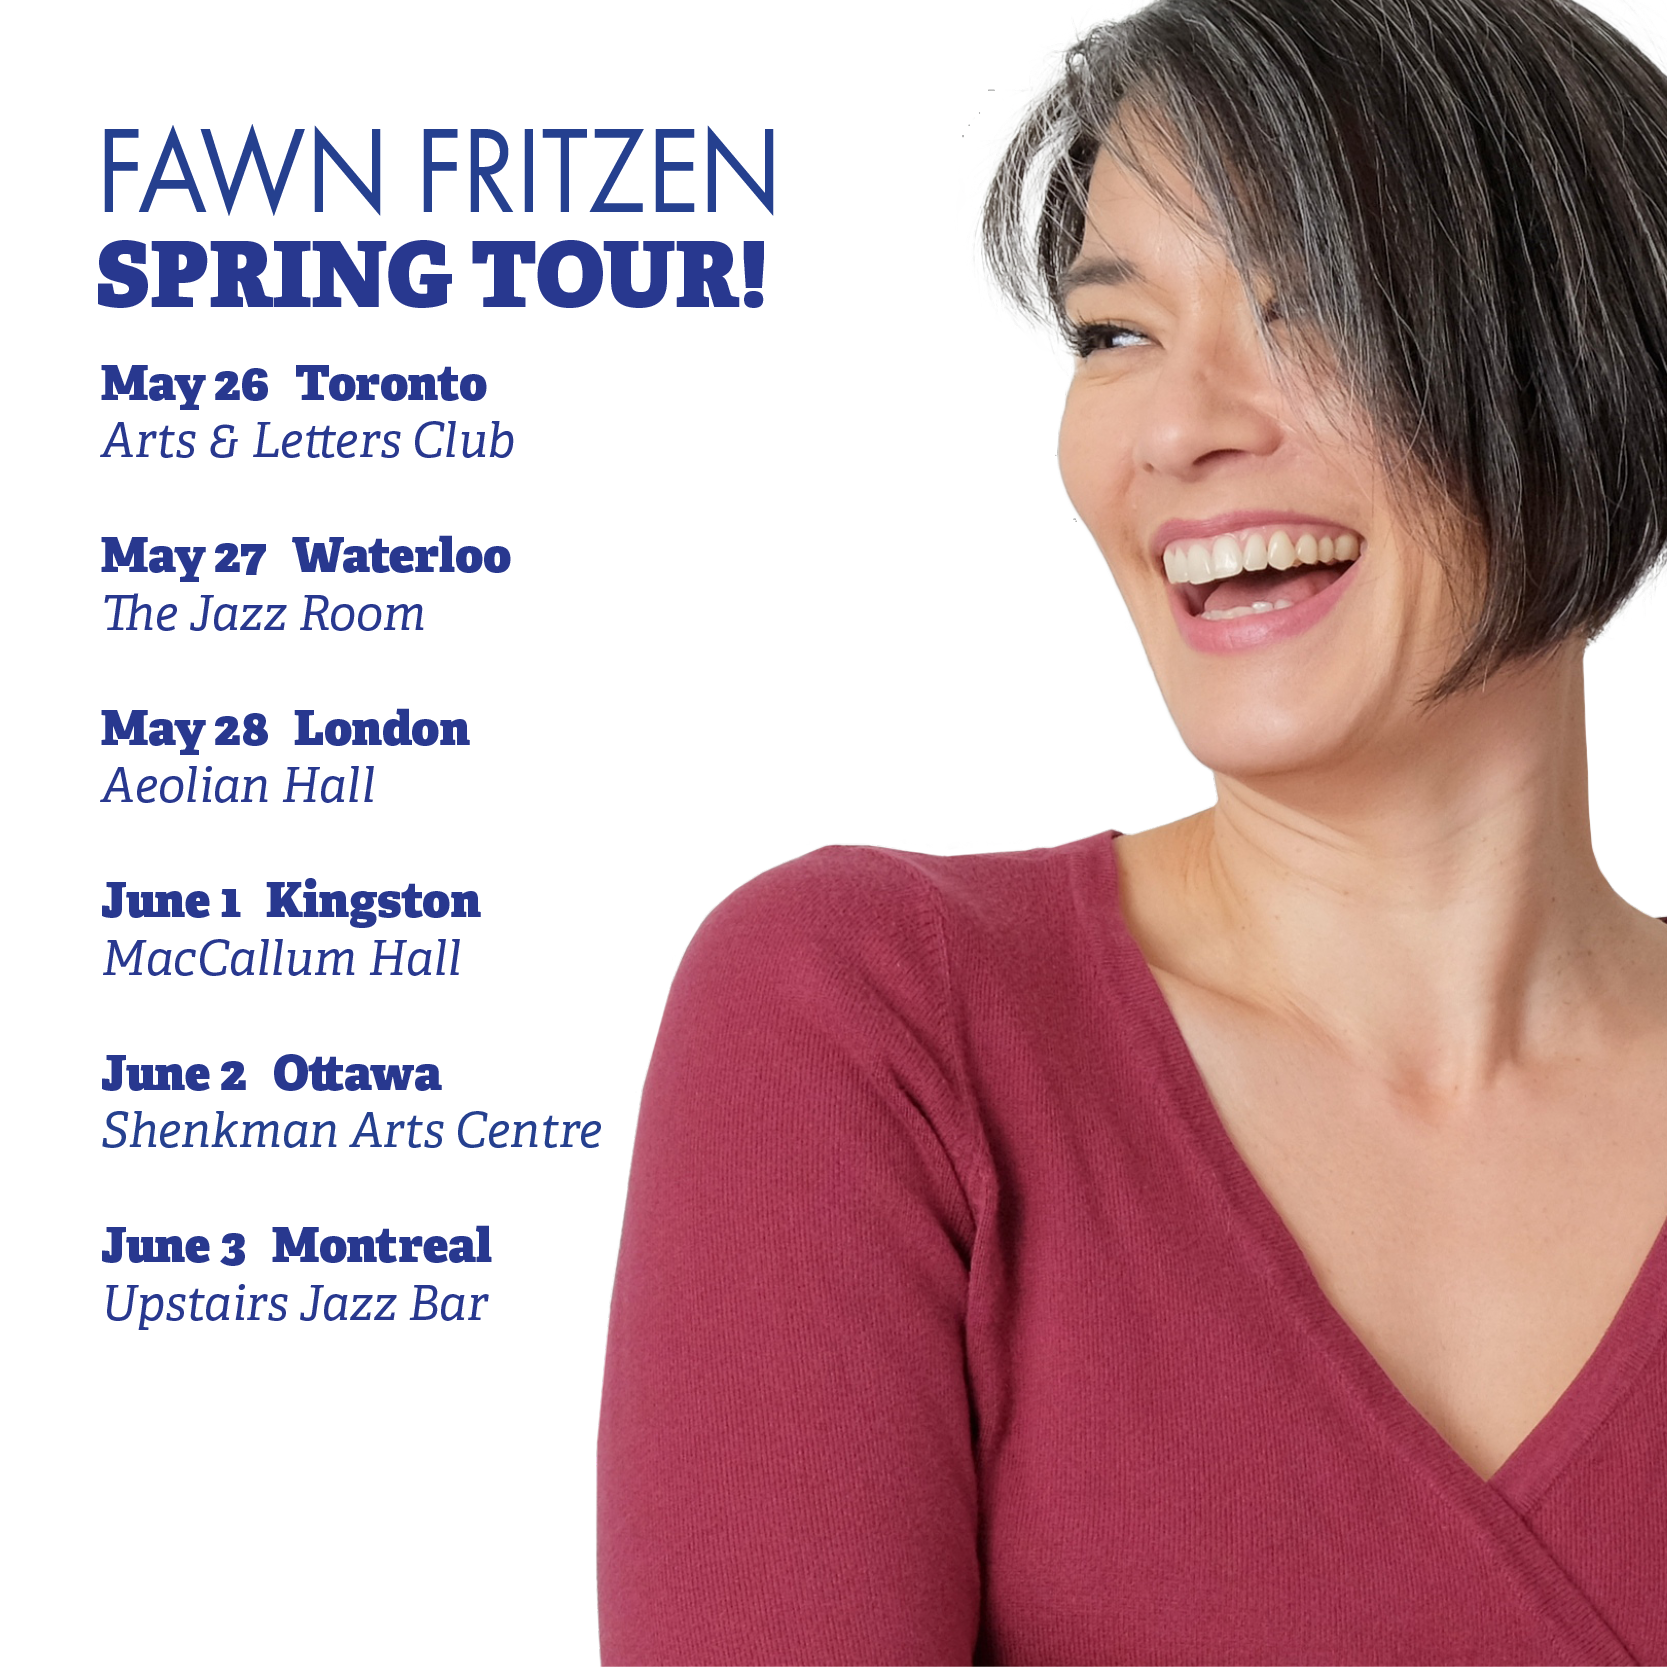 Fawn's Tour Dates, photo by Christian Kuntz